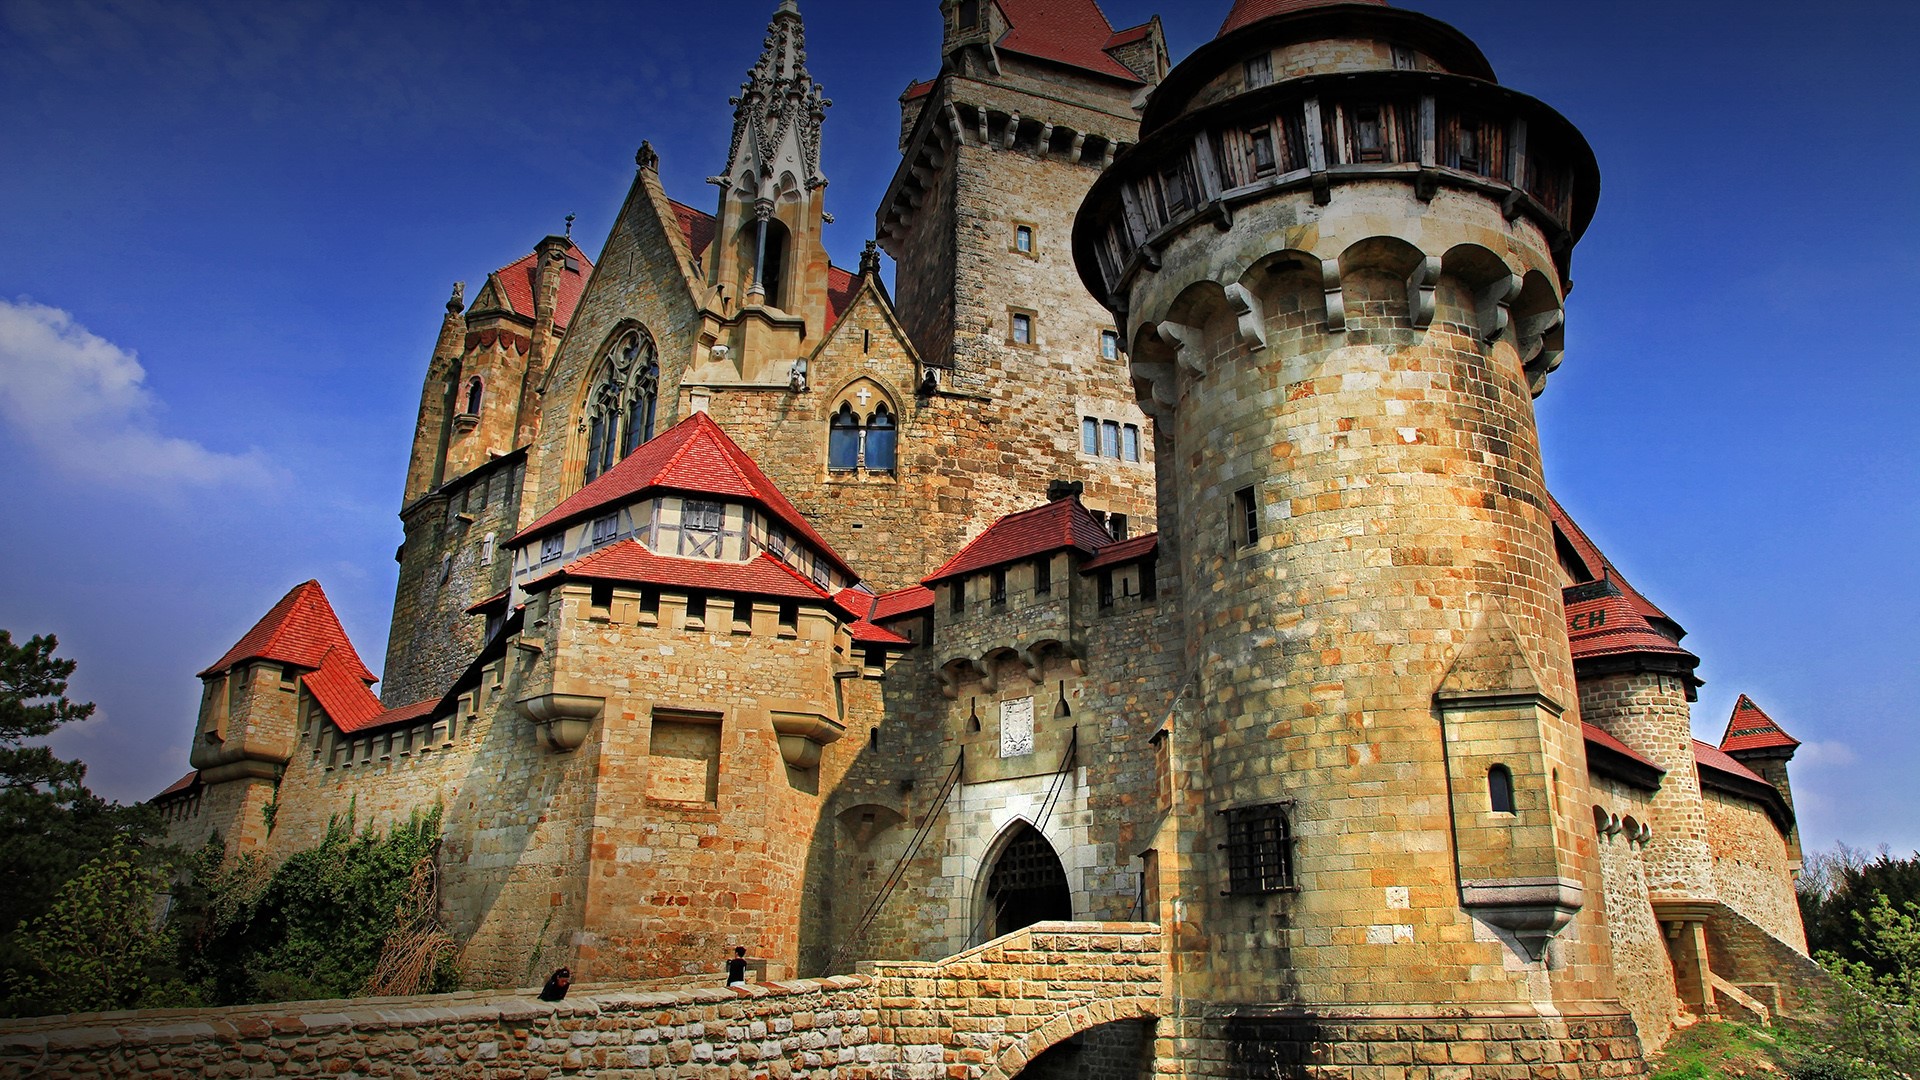 Burg Kreuzenstein castle near Leobendorf in Lower Austria, Austria |  Windows 10 Spotlight Images